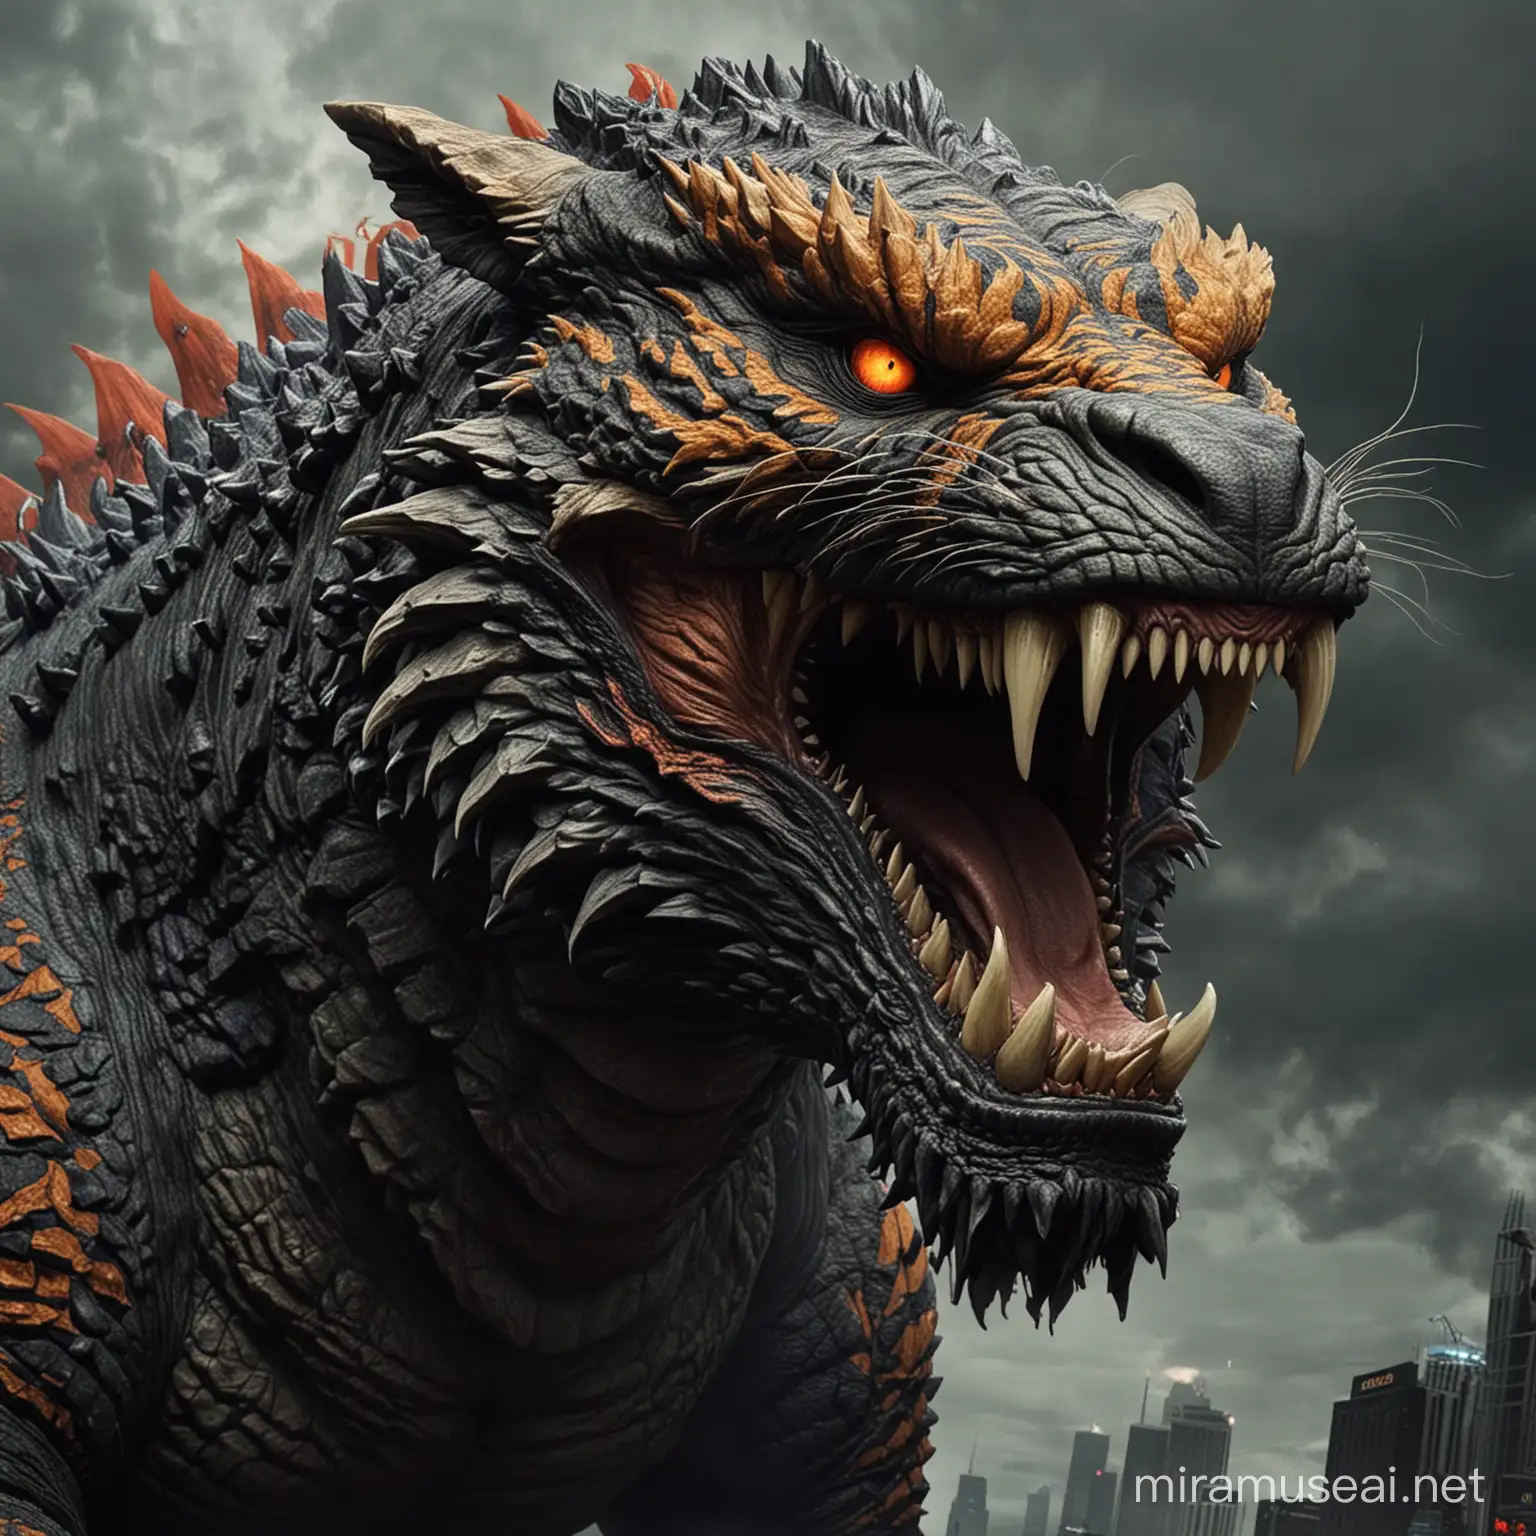 Fierce Godzilla Tiger with Oni Teeth Roaring in Fiery Inferno